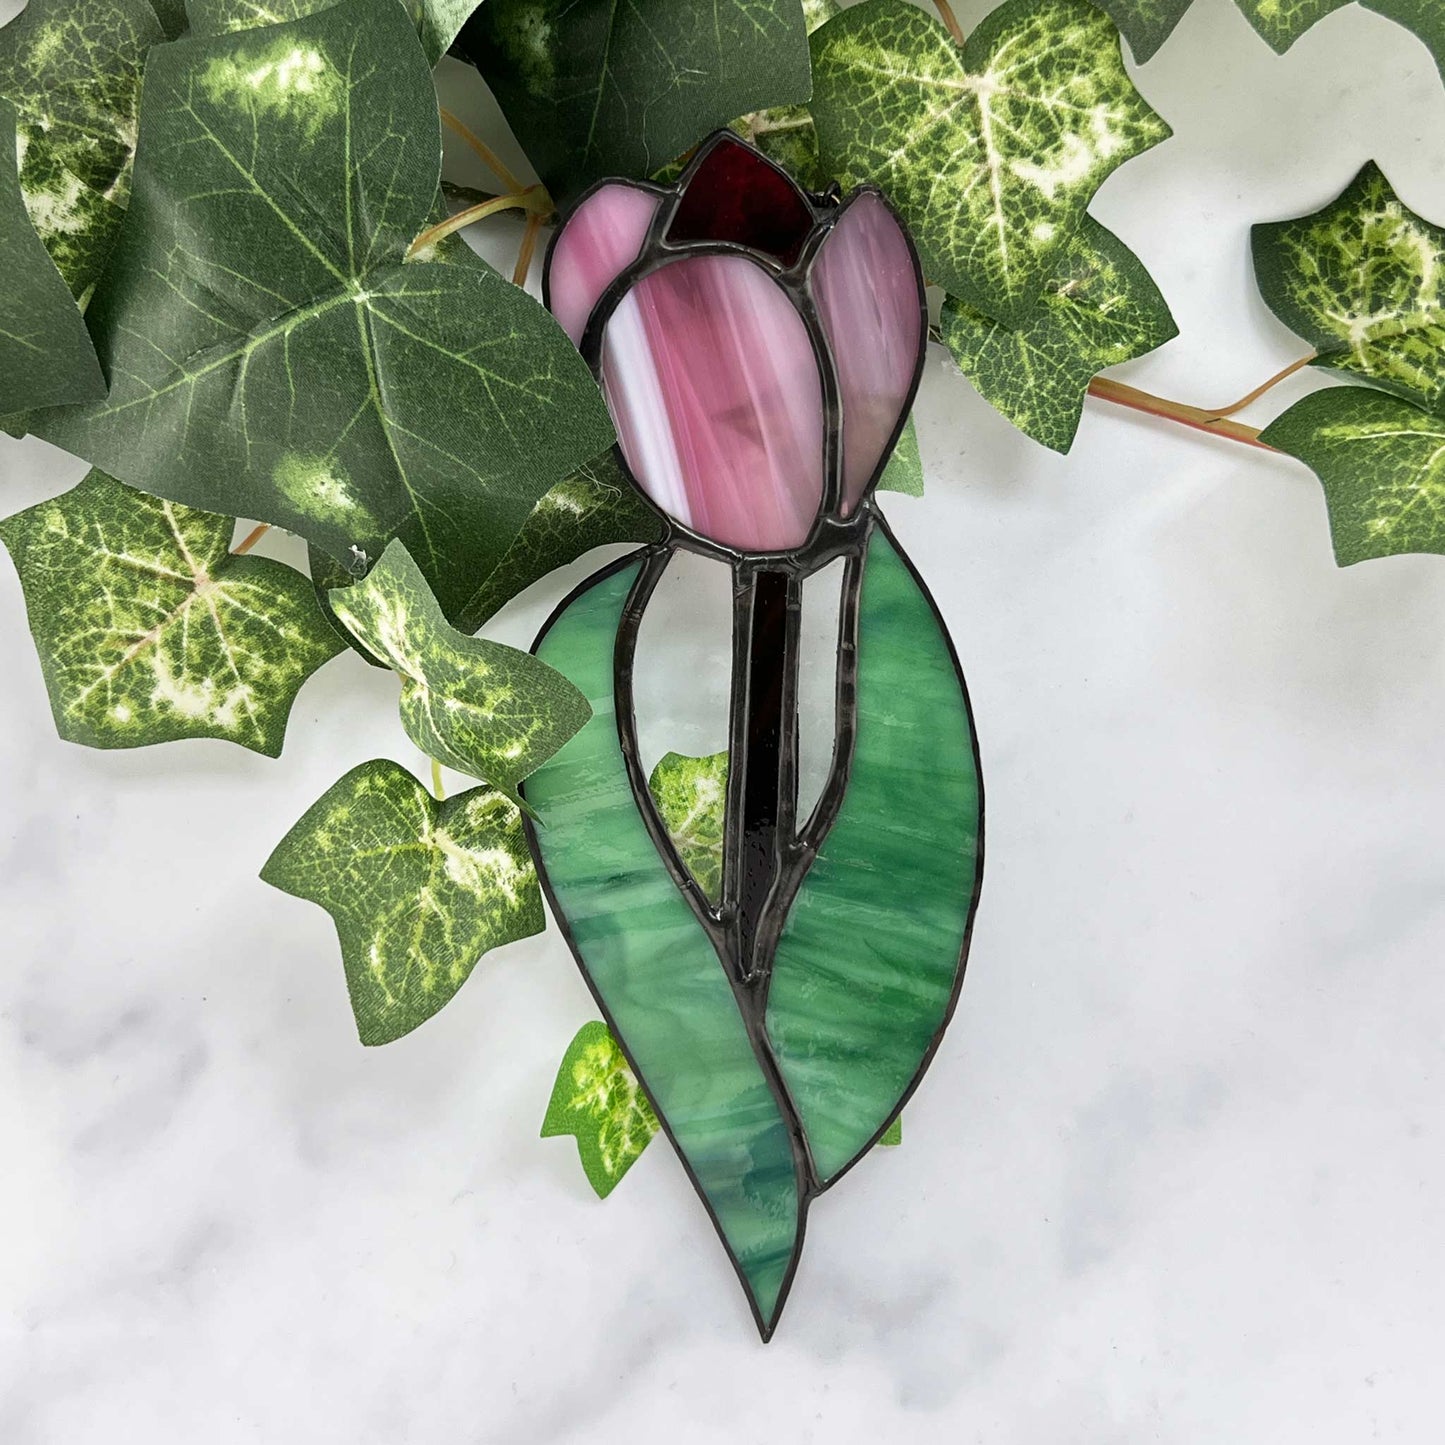 Tulip Stained Glass Pattern • Tulip Flower Suncatcher Pattern – OzGlassArt  Patterns